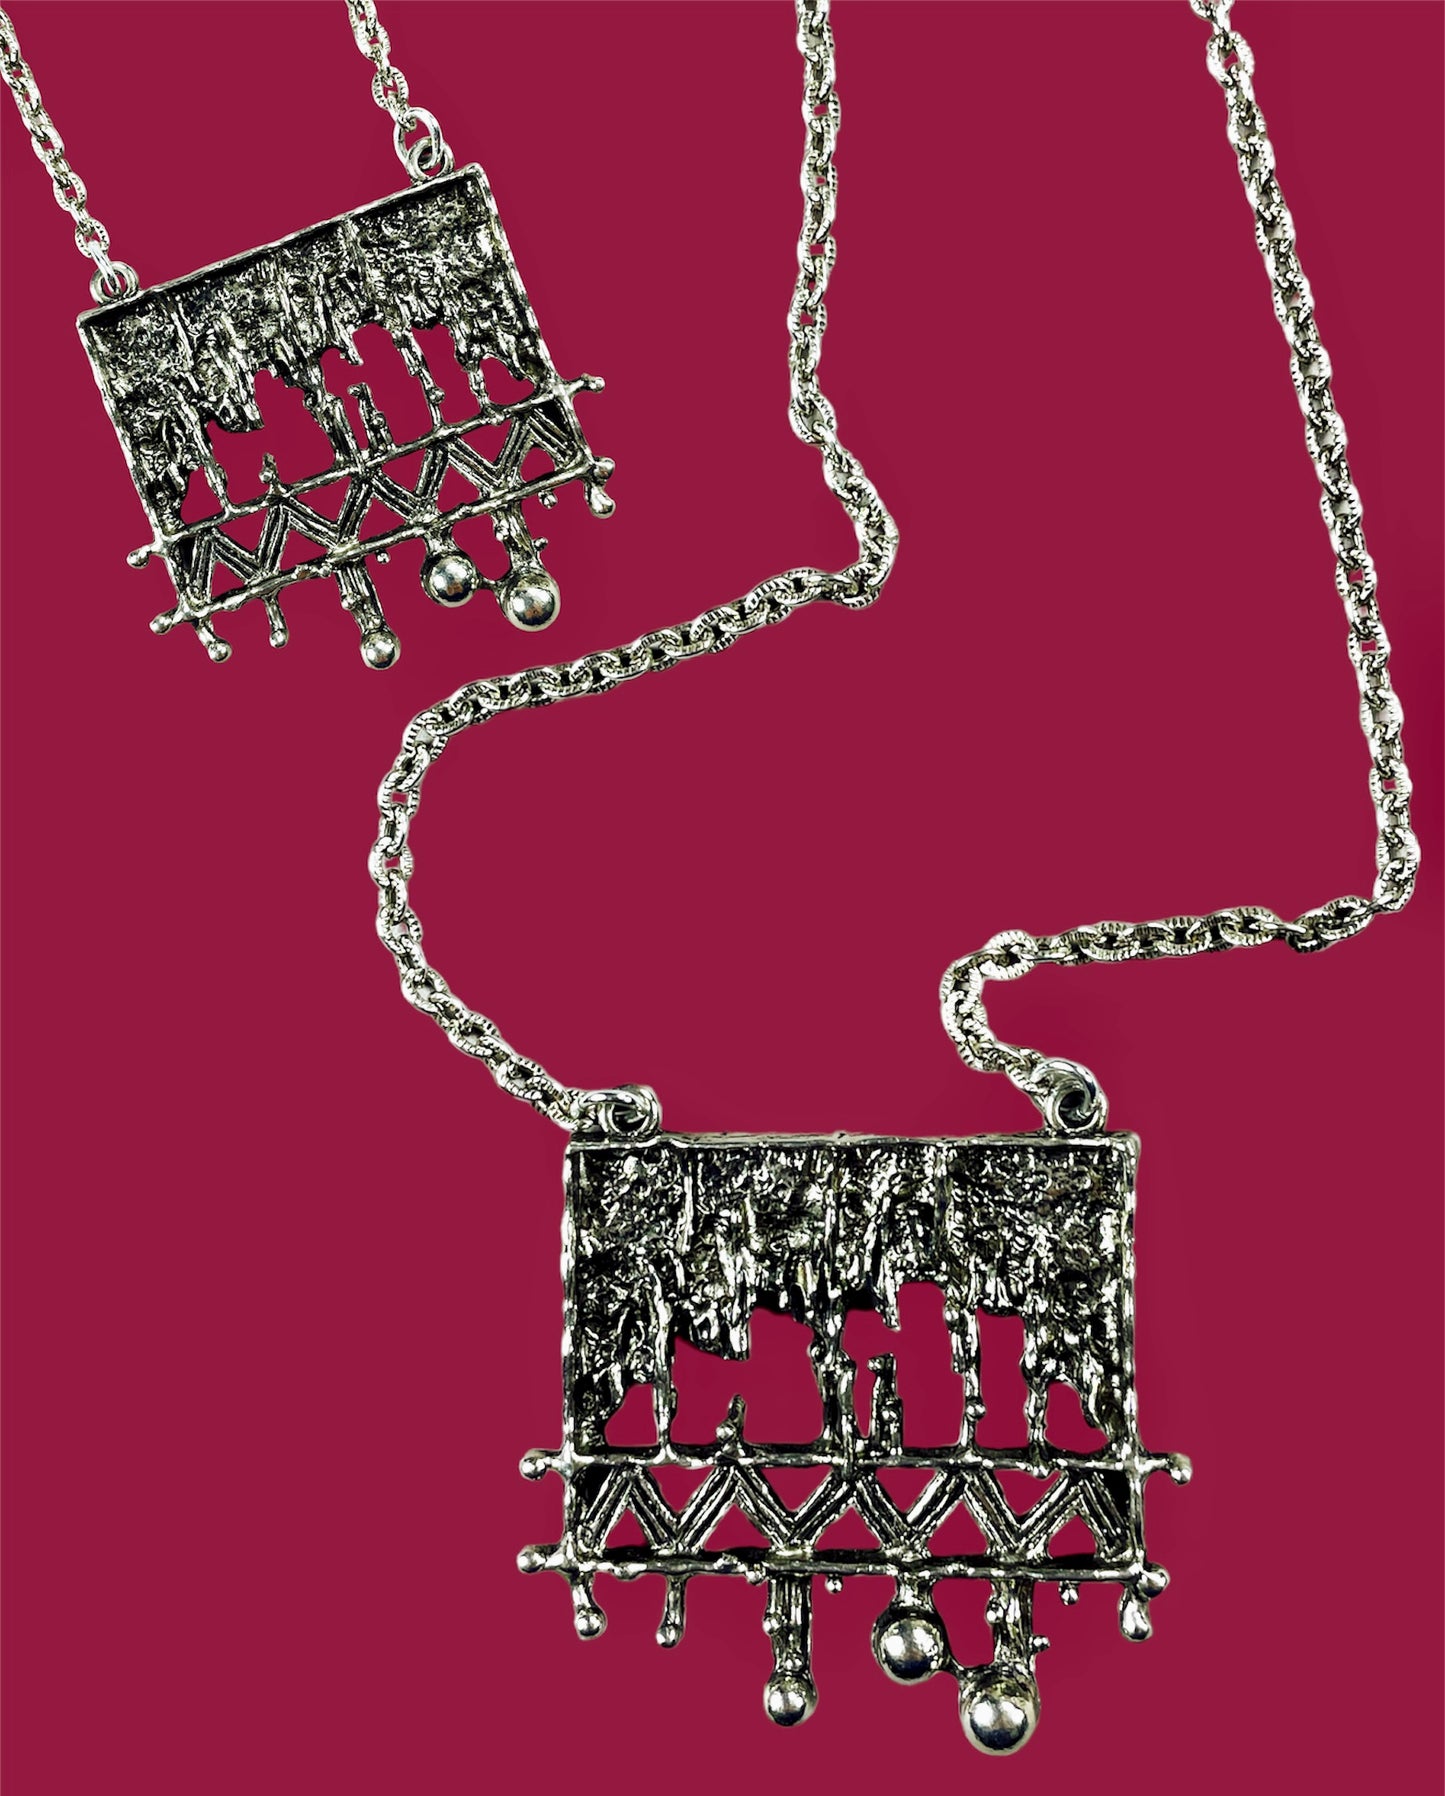 Abstract rectangular silvered metal pendant